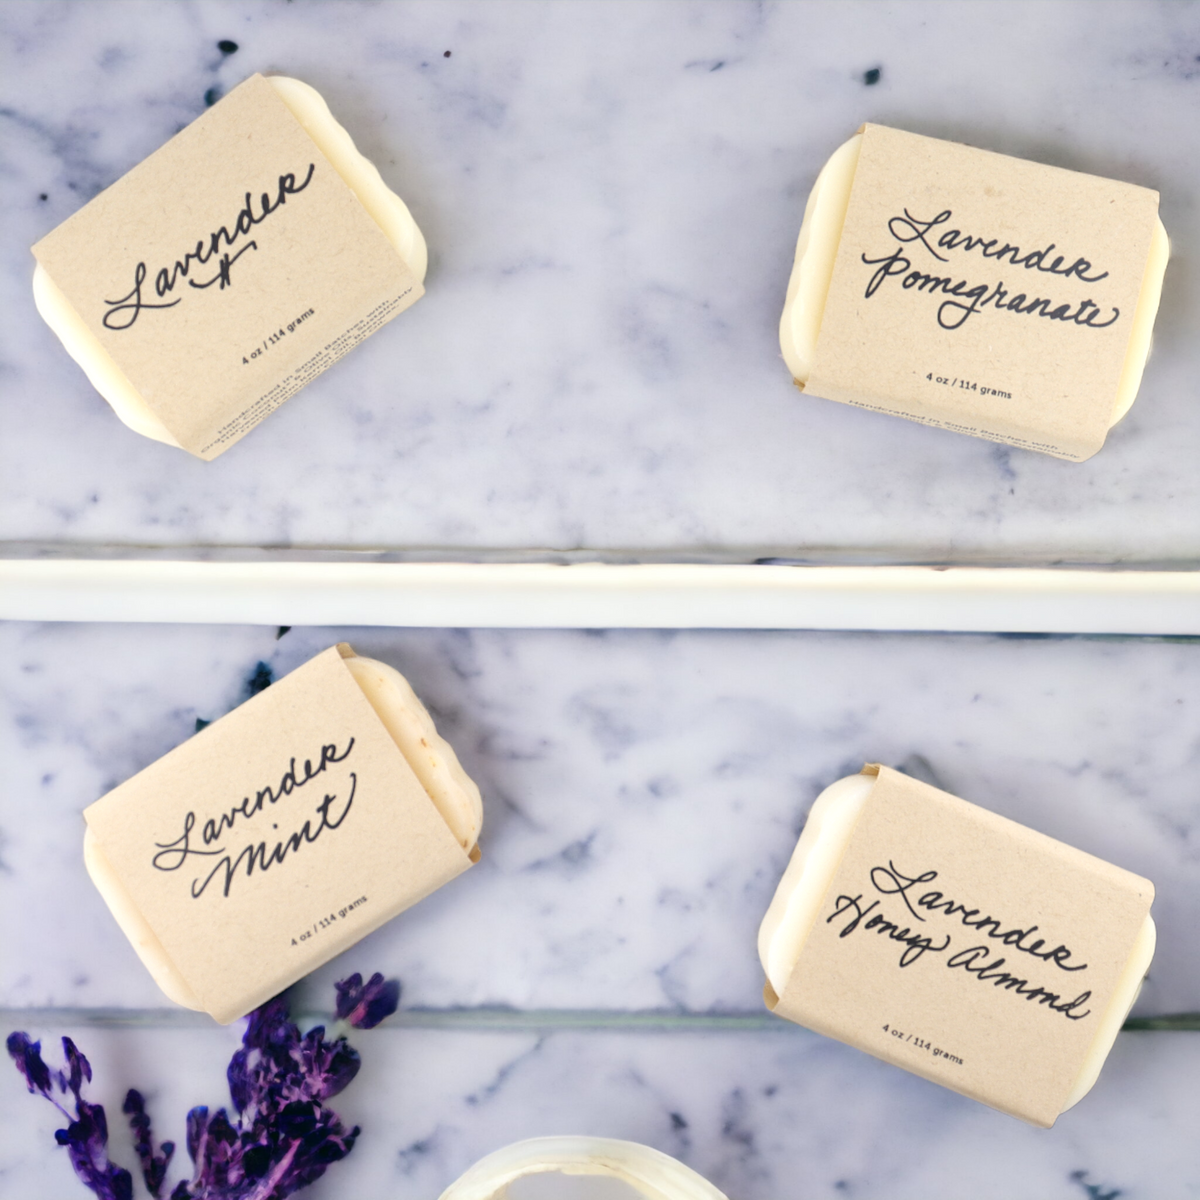 Men's Lavender Hand Soap - 12 oz – Fragrant Isle Lavender Farm & Shop